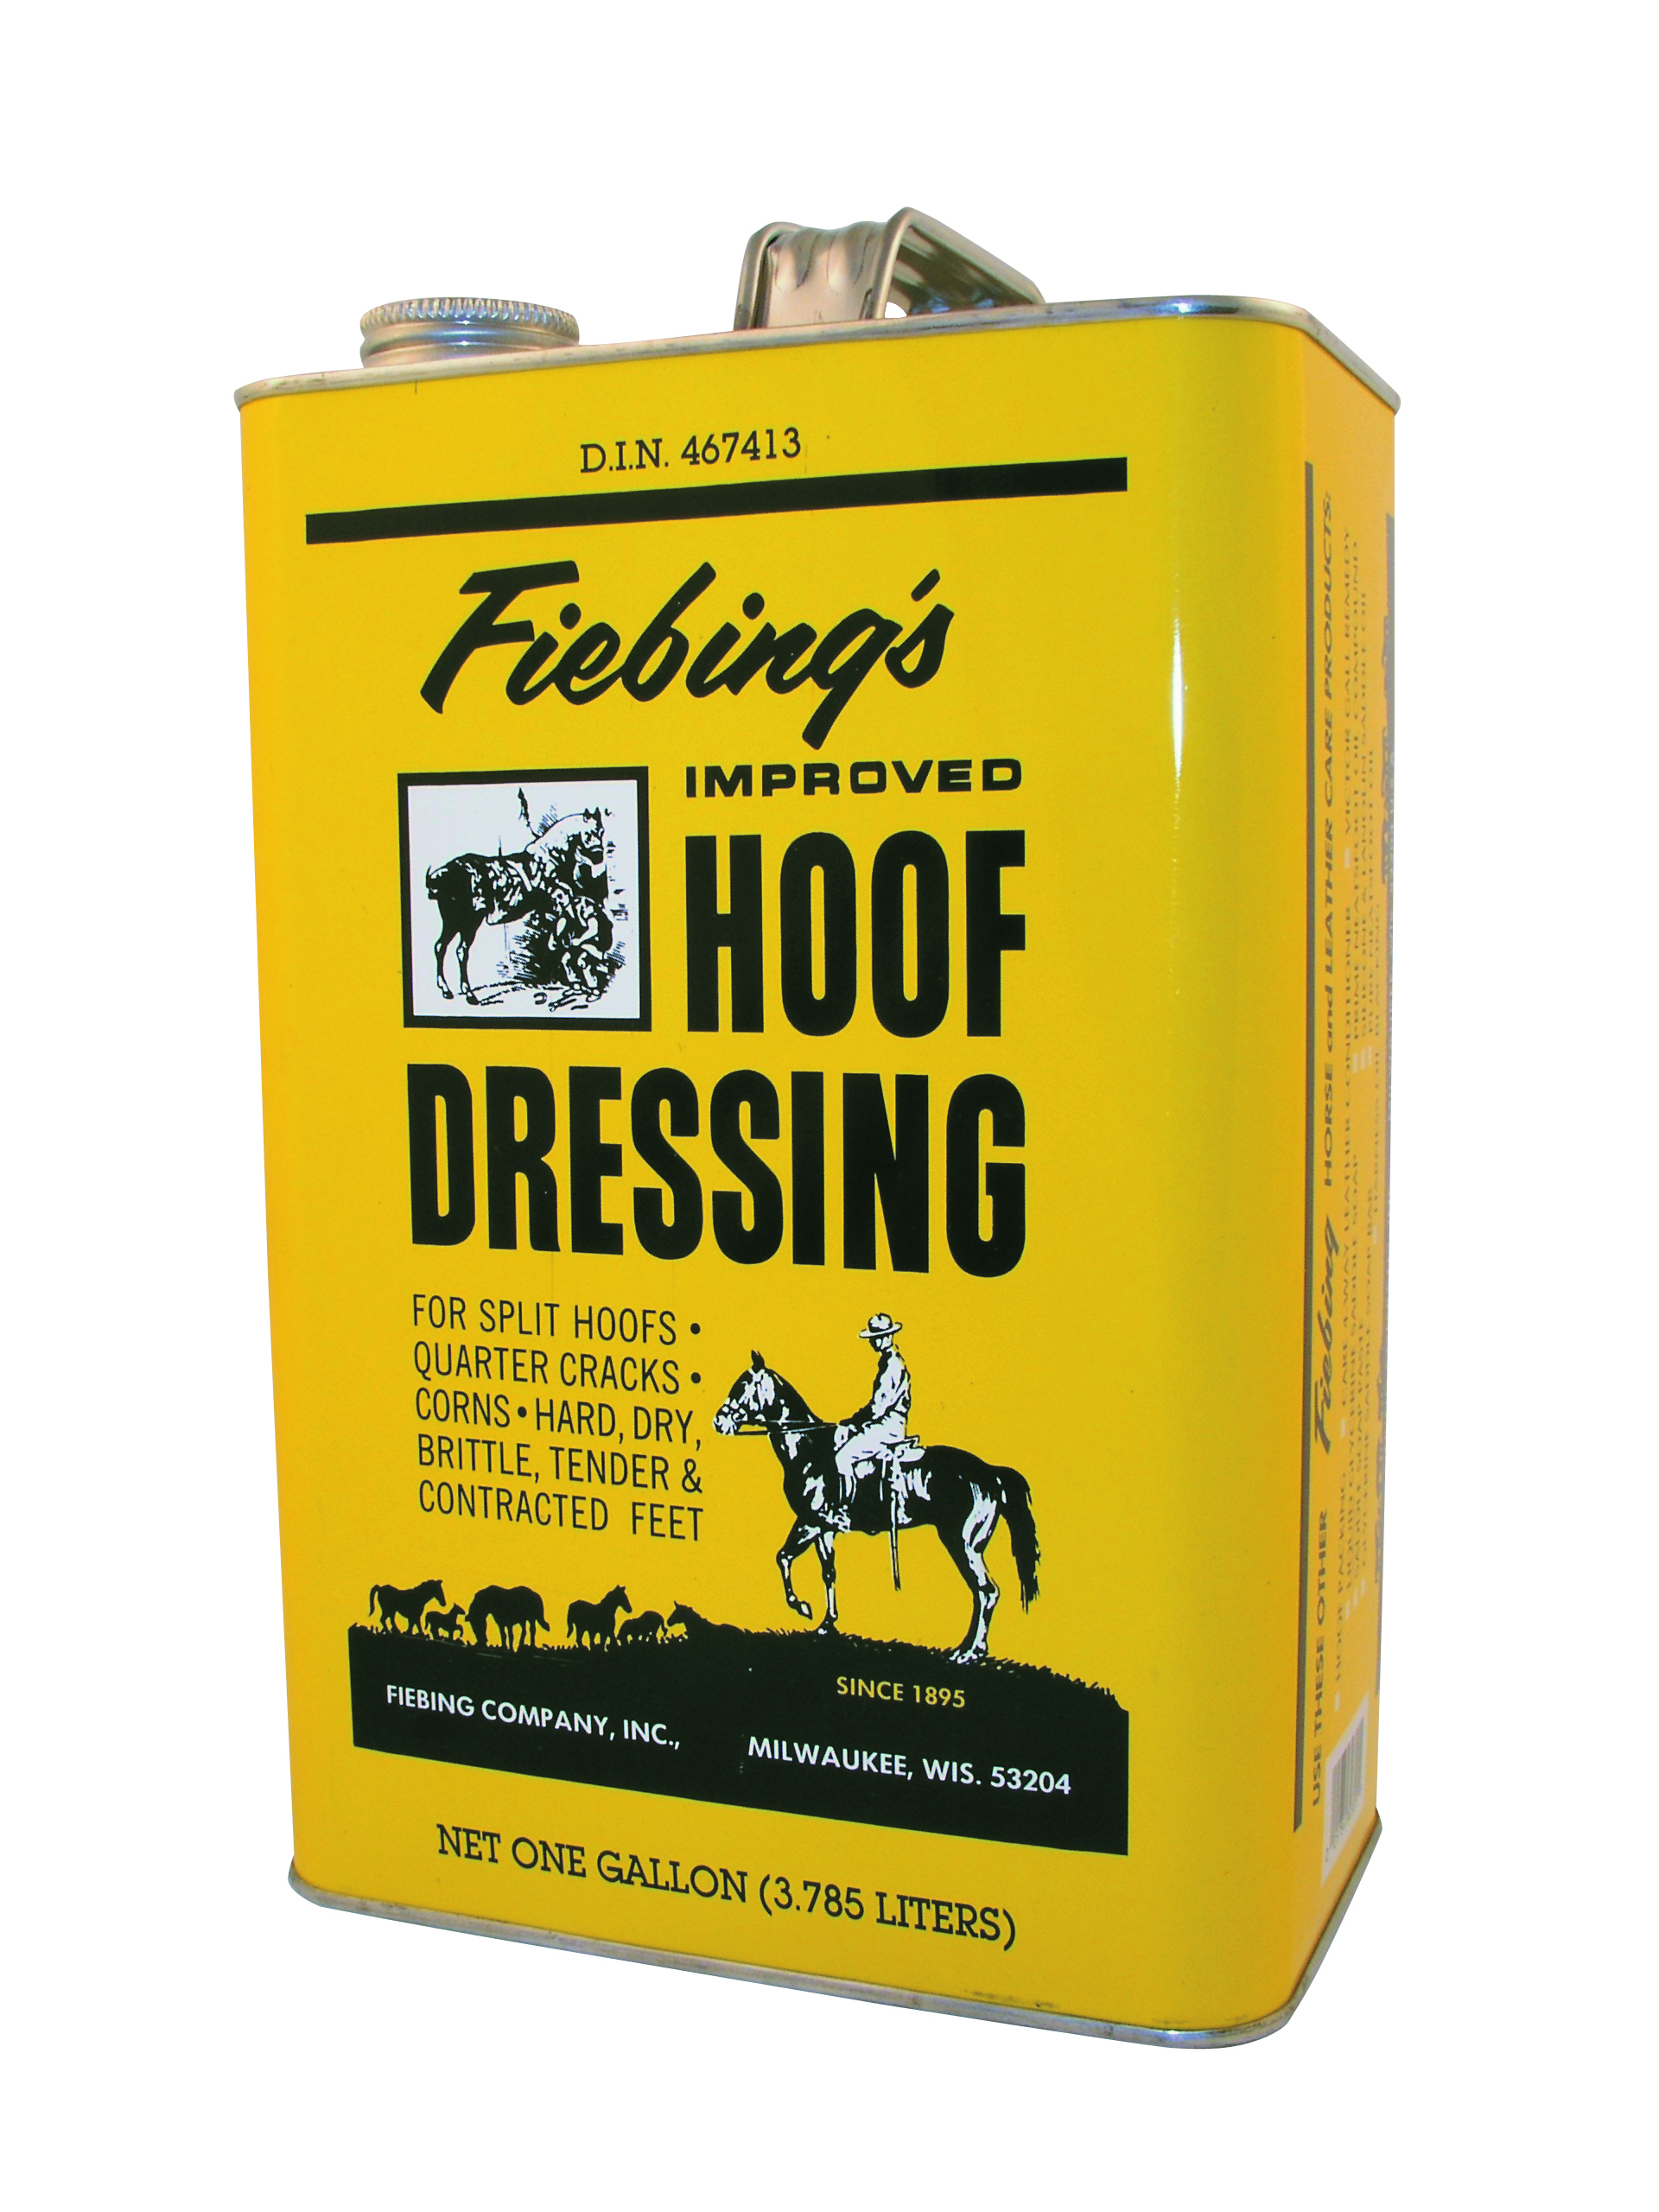 Fiebing Hoof Dressing 32 ounce